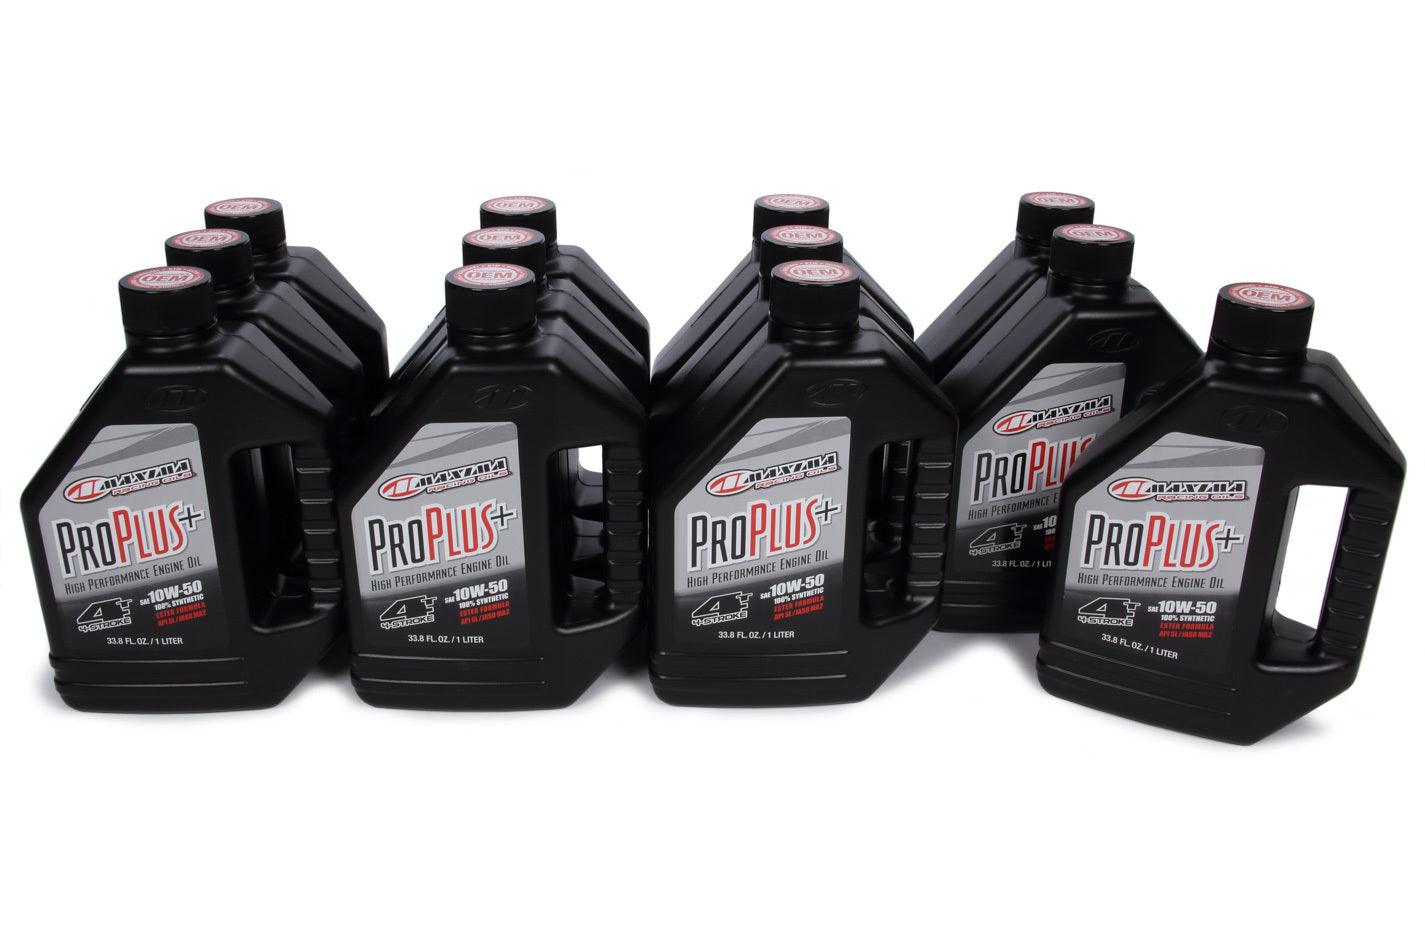 Pro Plus+ 10w50 Syntheti c Case 12 x 1 Liter - Burlile Performance Products